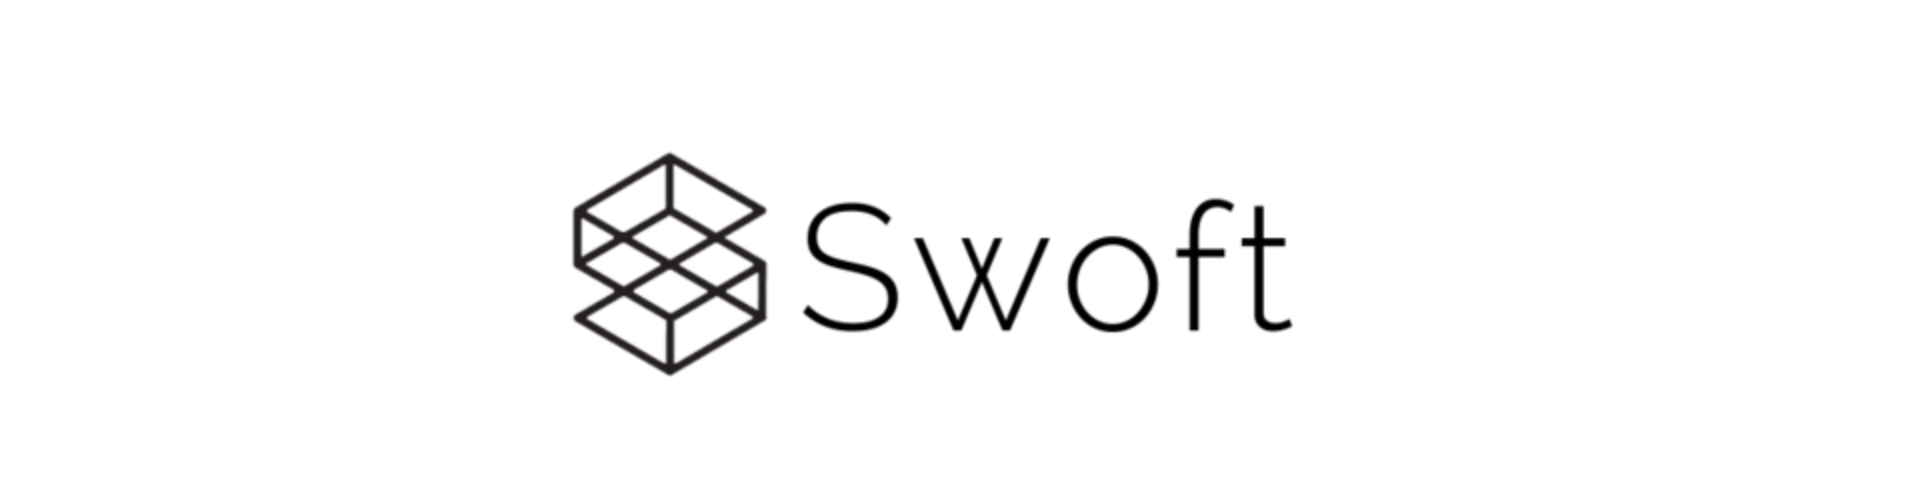 swoft-logo